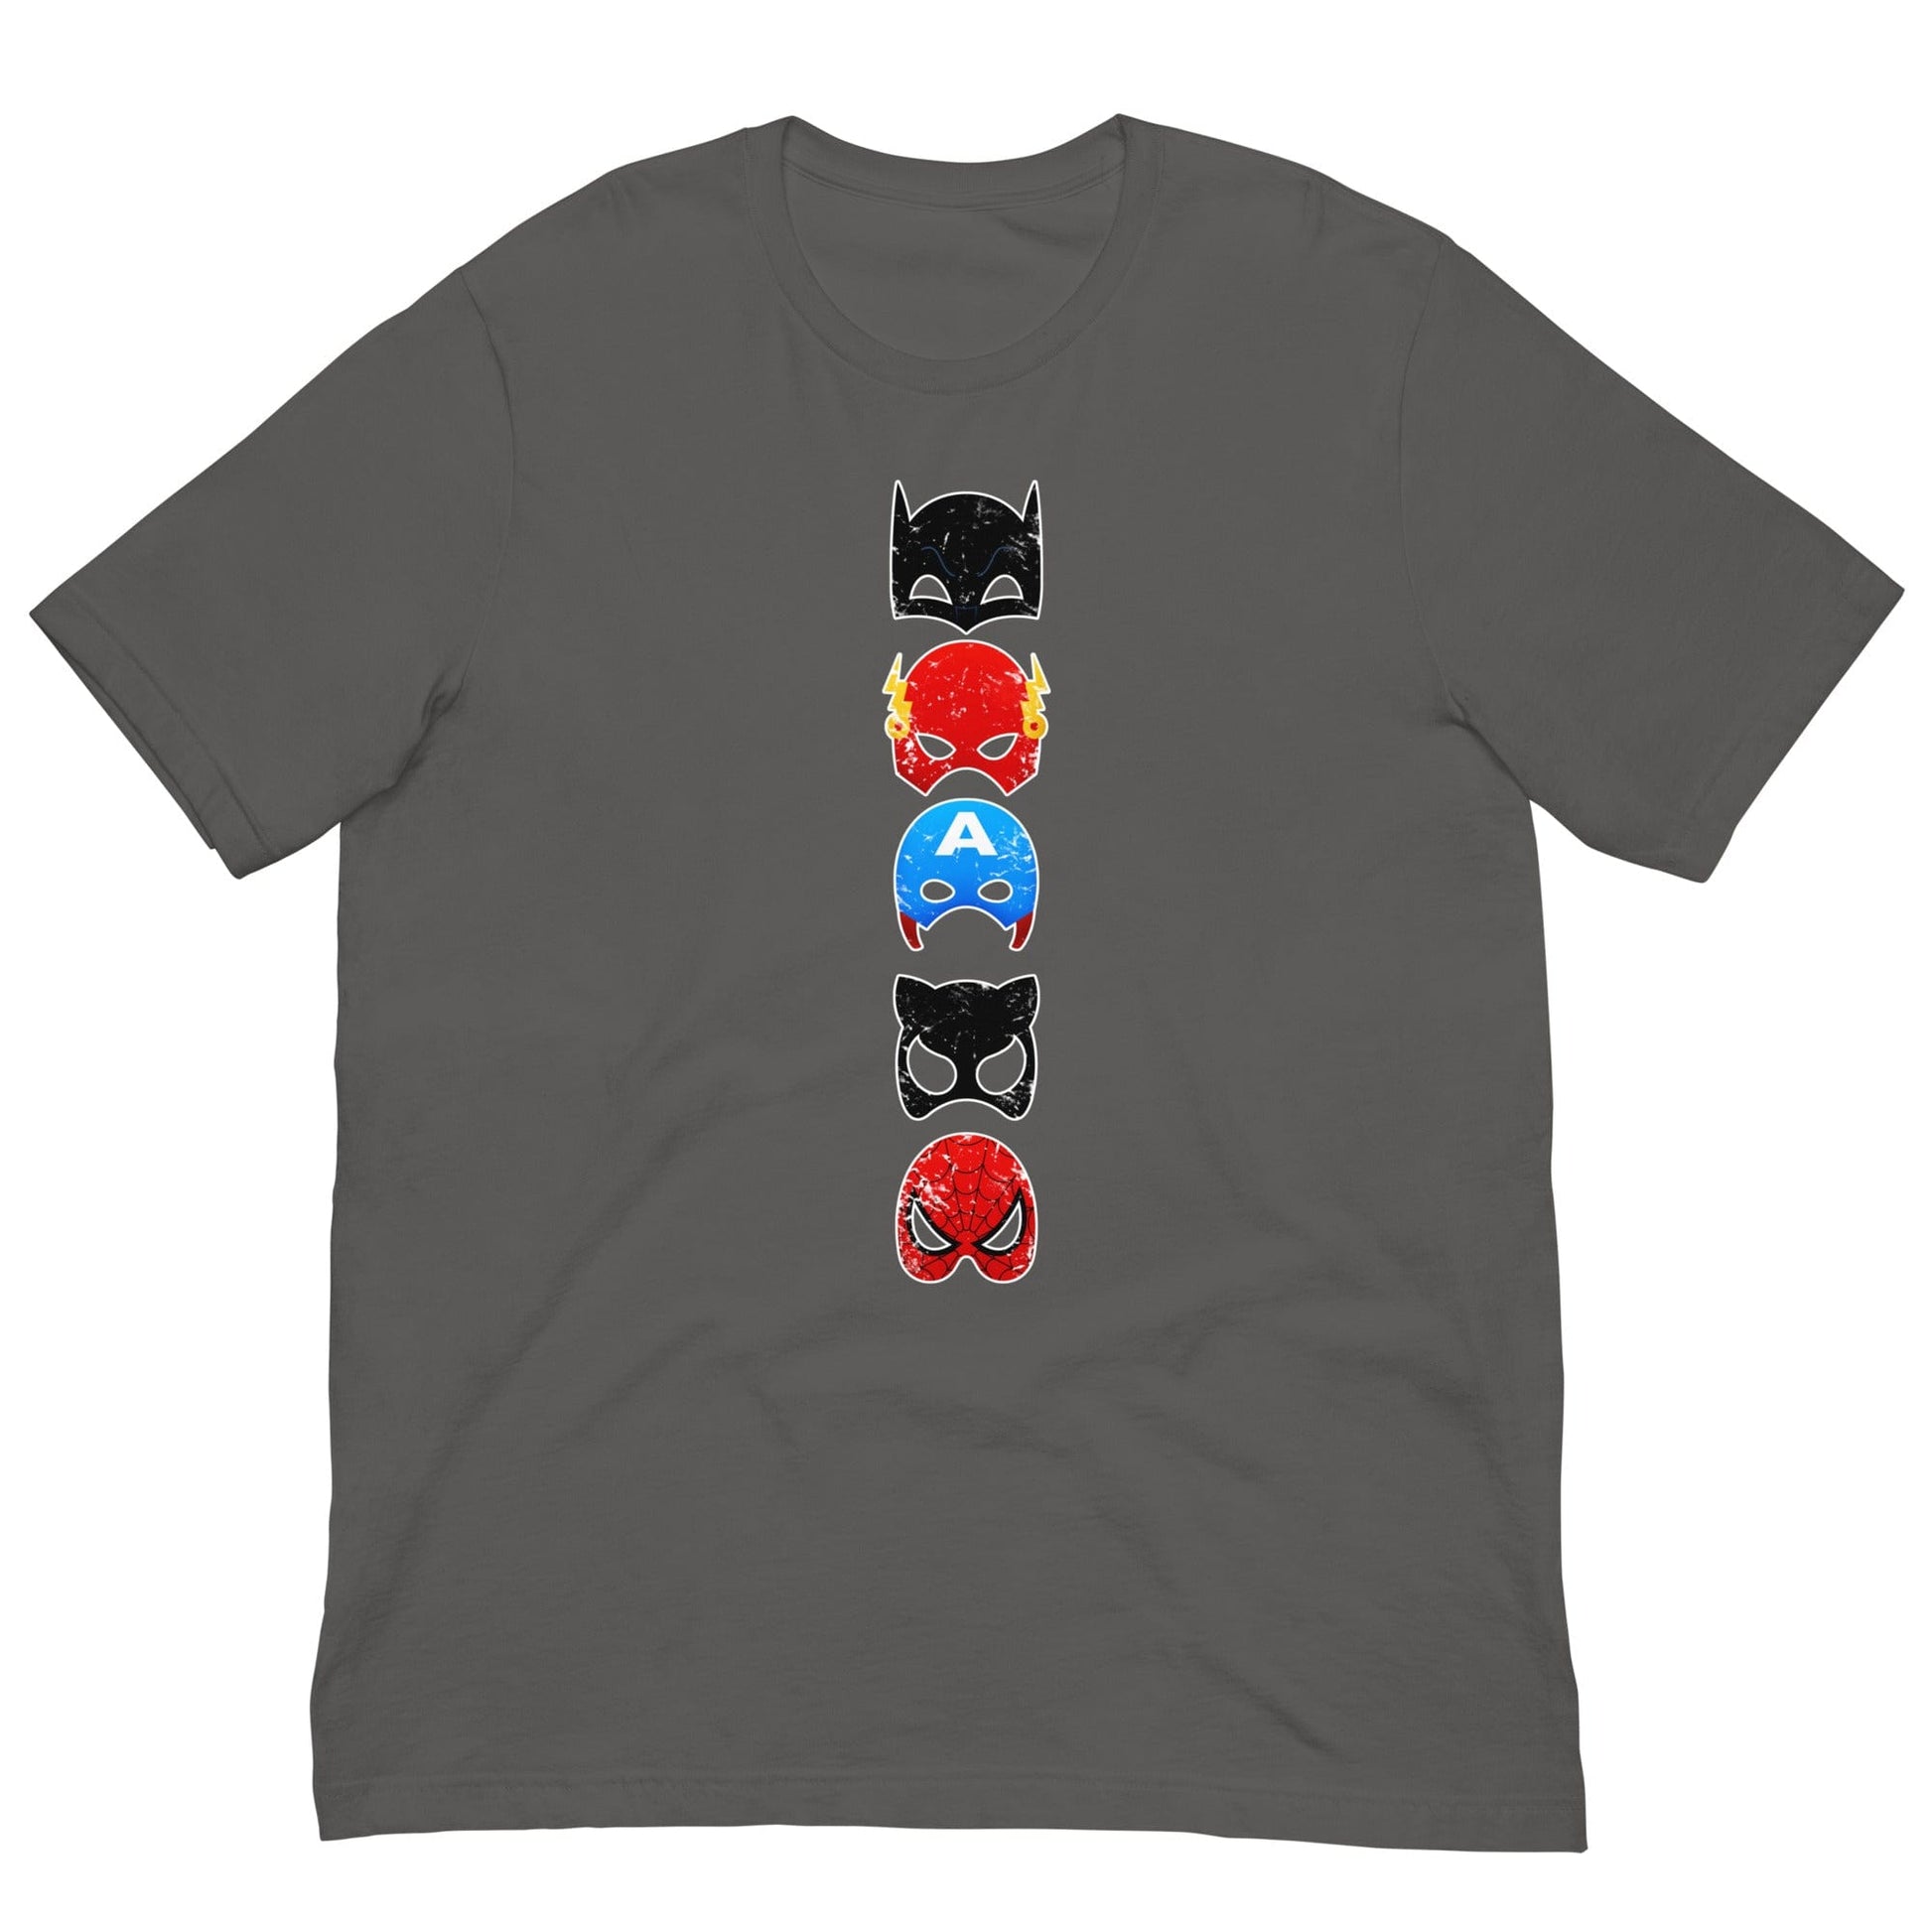 Superheroes T-shirt Asphalt / S